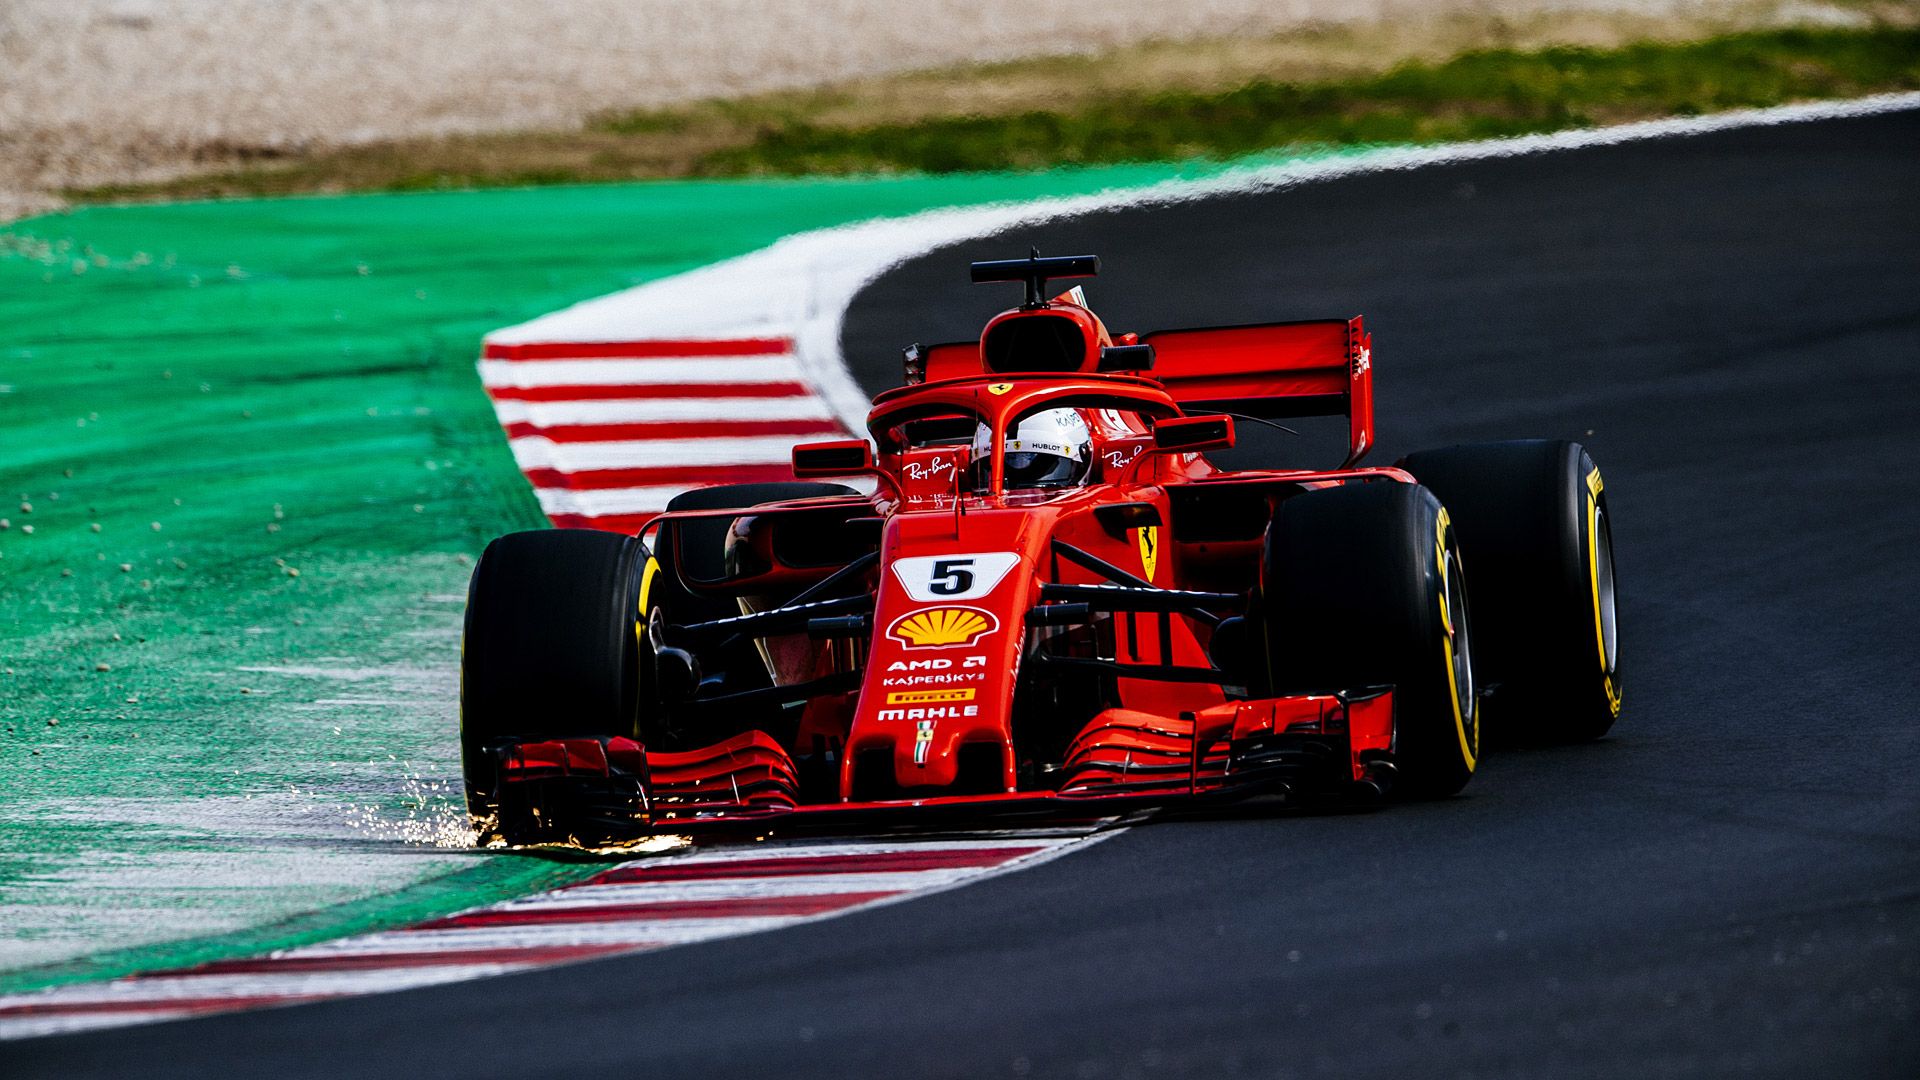 F1 Ferrari Wallpaper